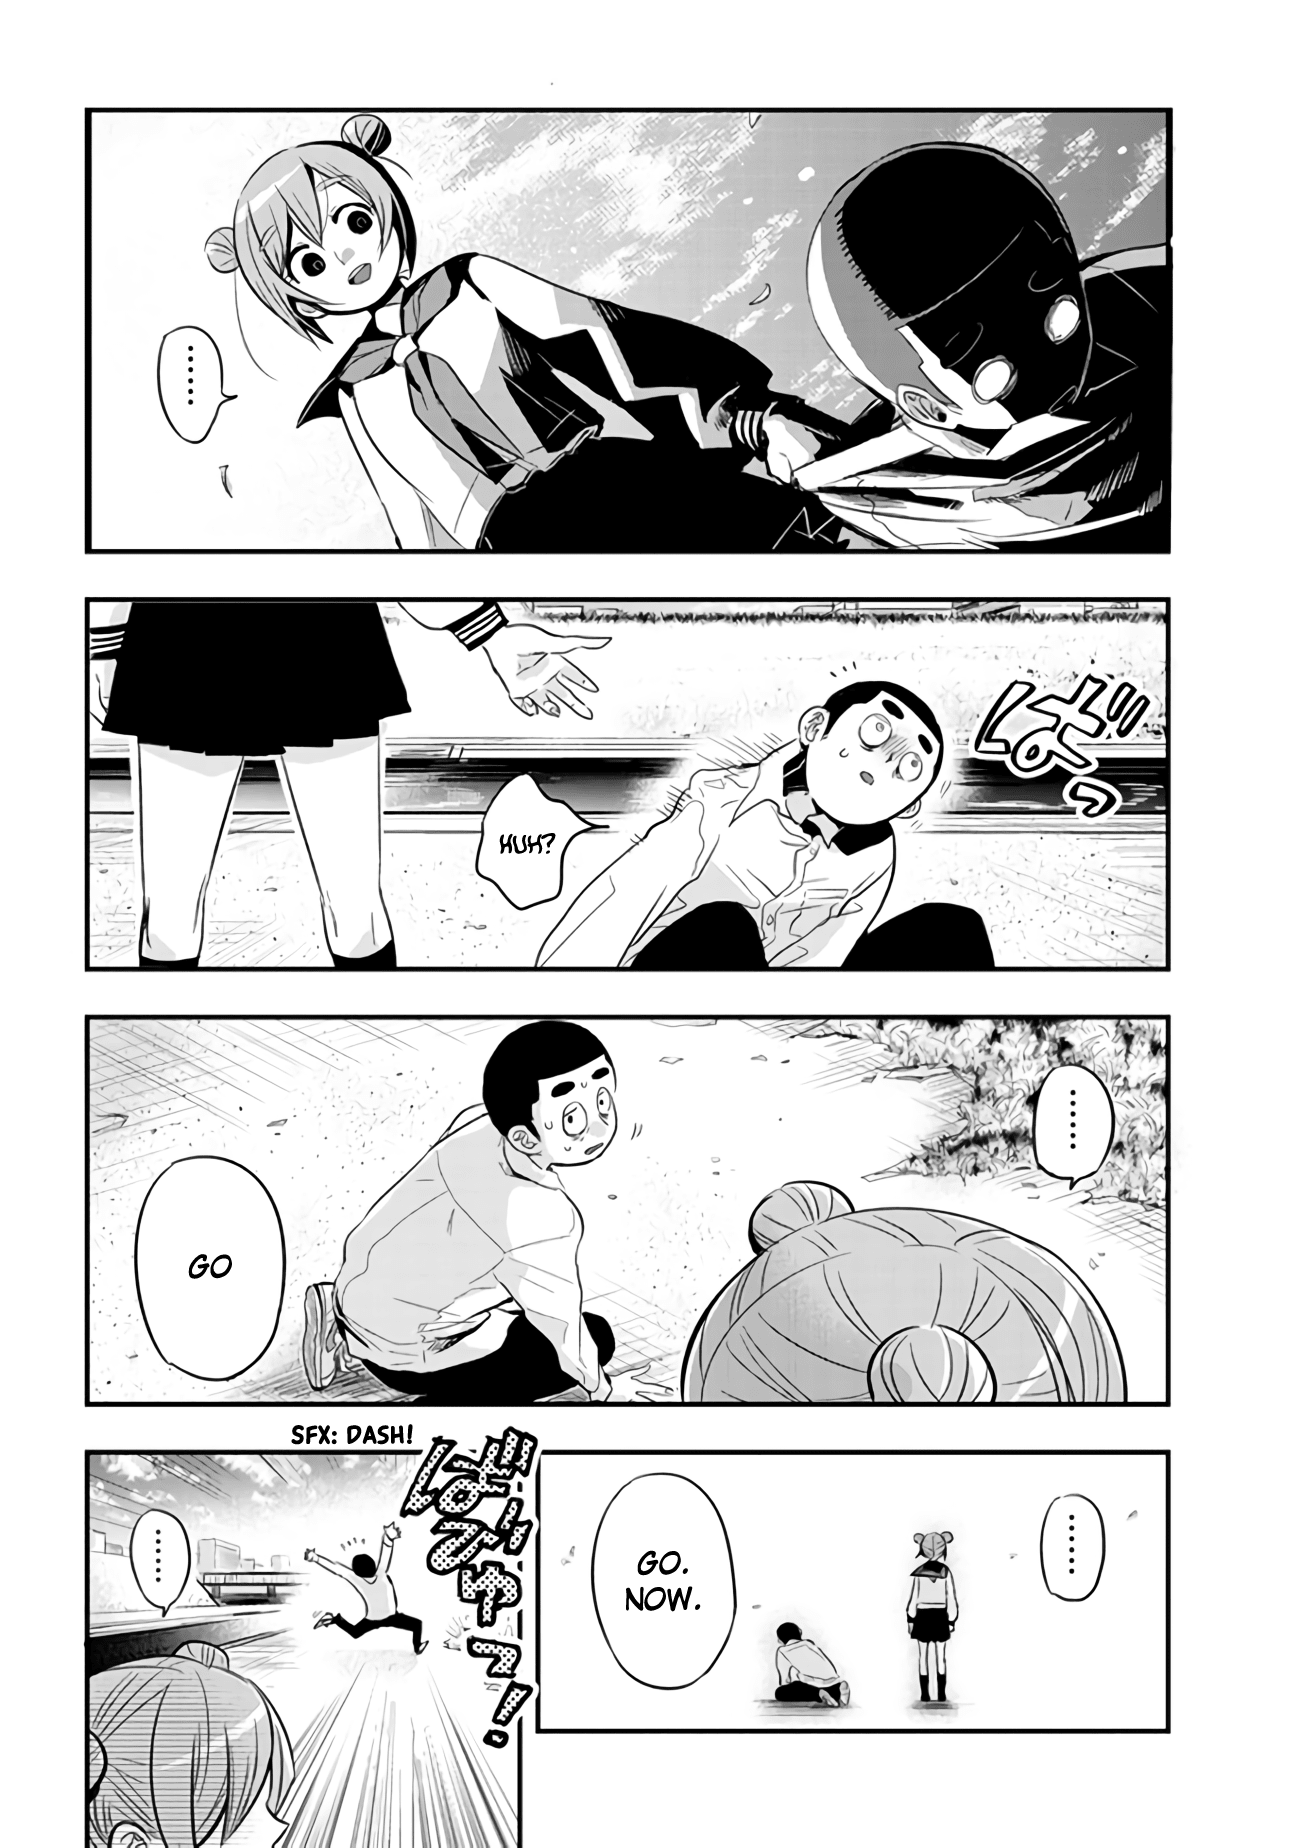 Giri-Giri Saegiru Katagirisan - Page 2